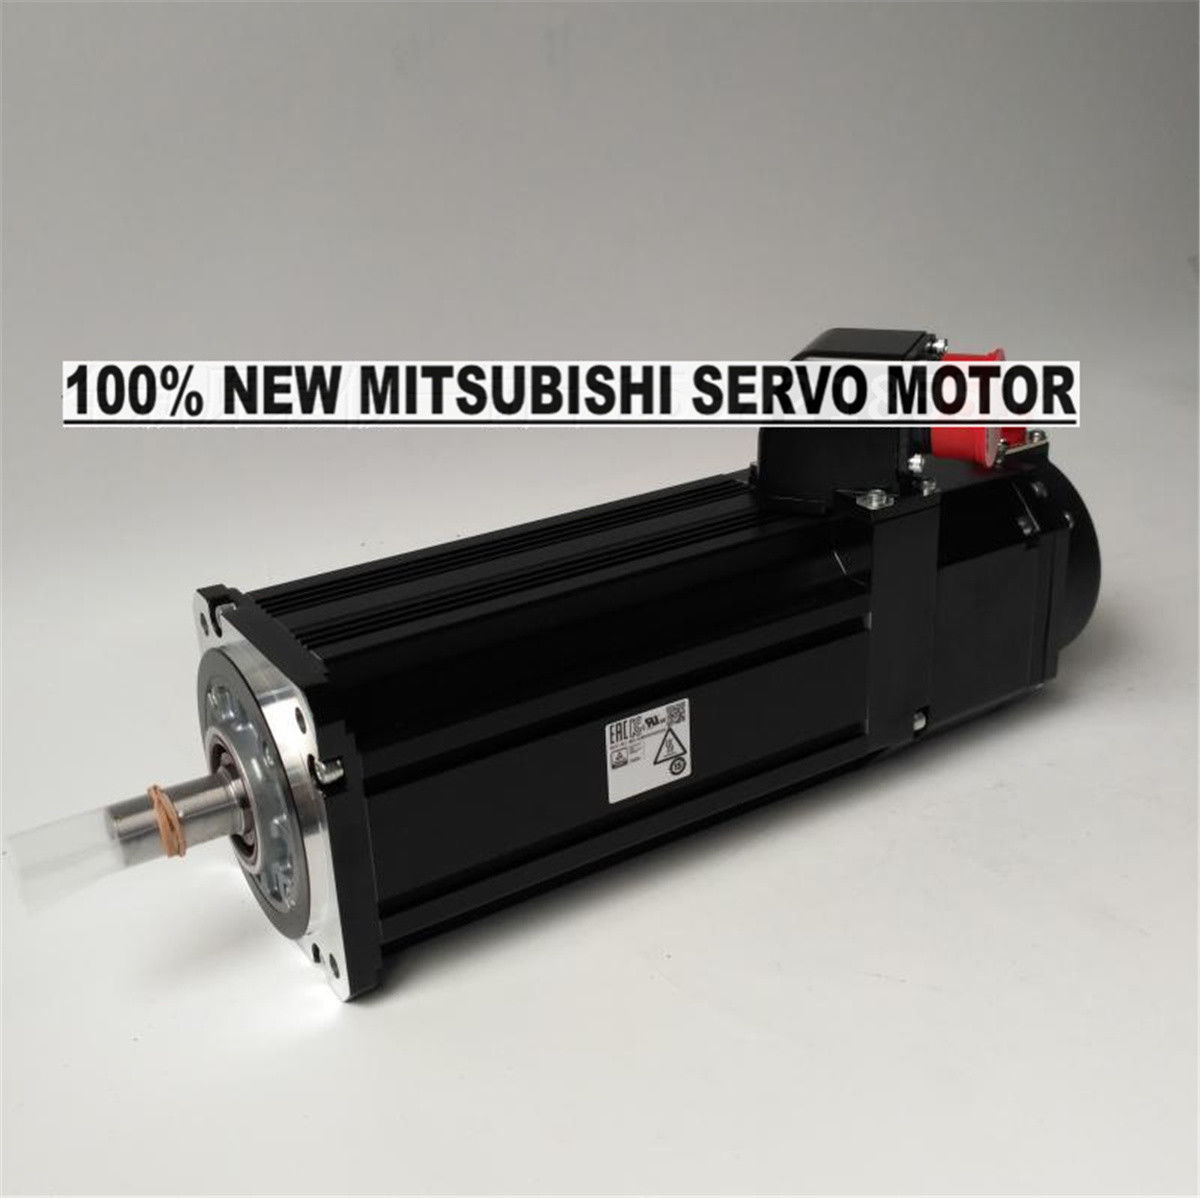 NEW Mitsubishi Servo Motor HG-JR203B in box HGJR203B - zum Schließen ins Bild klicken